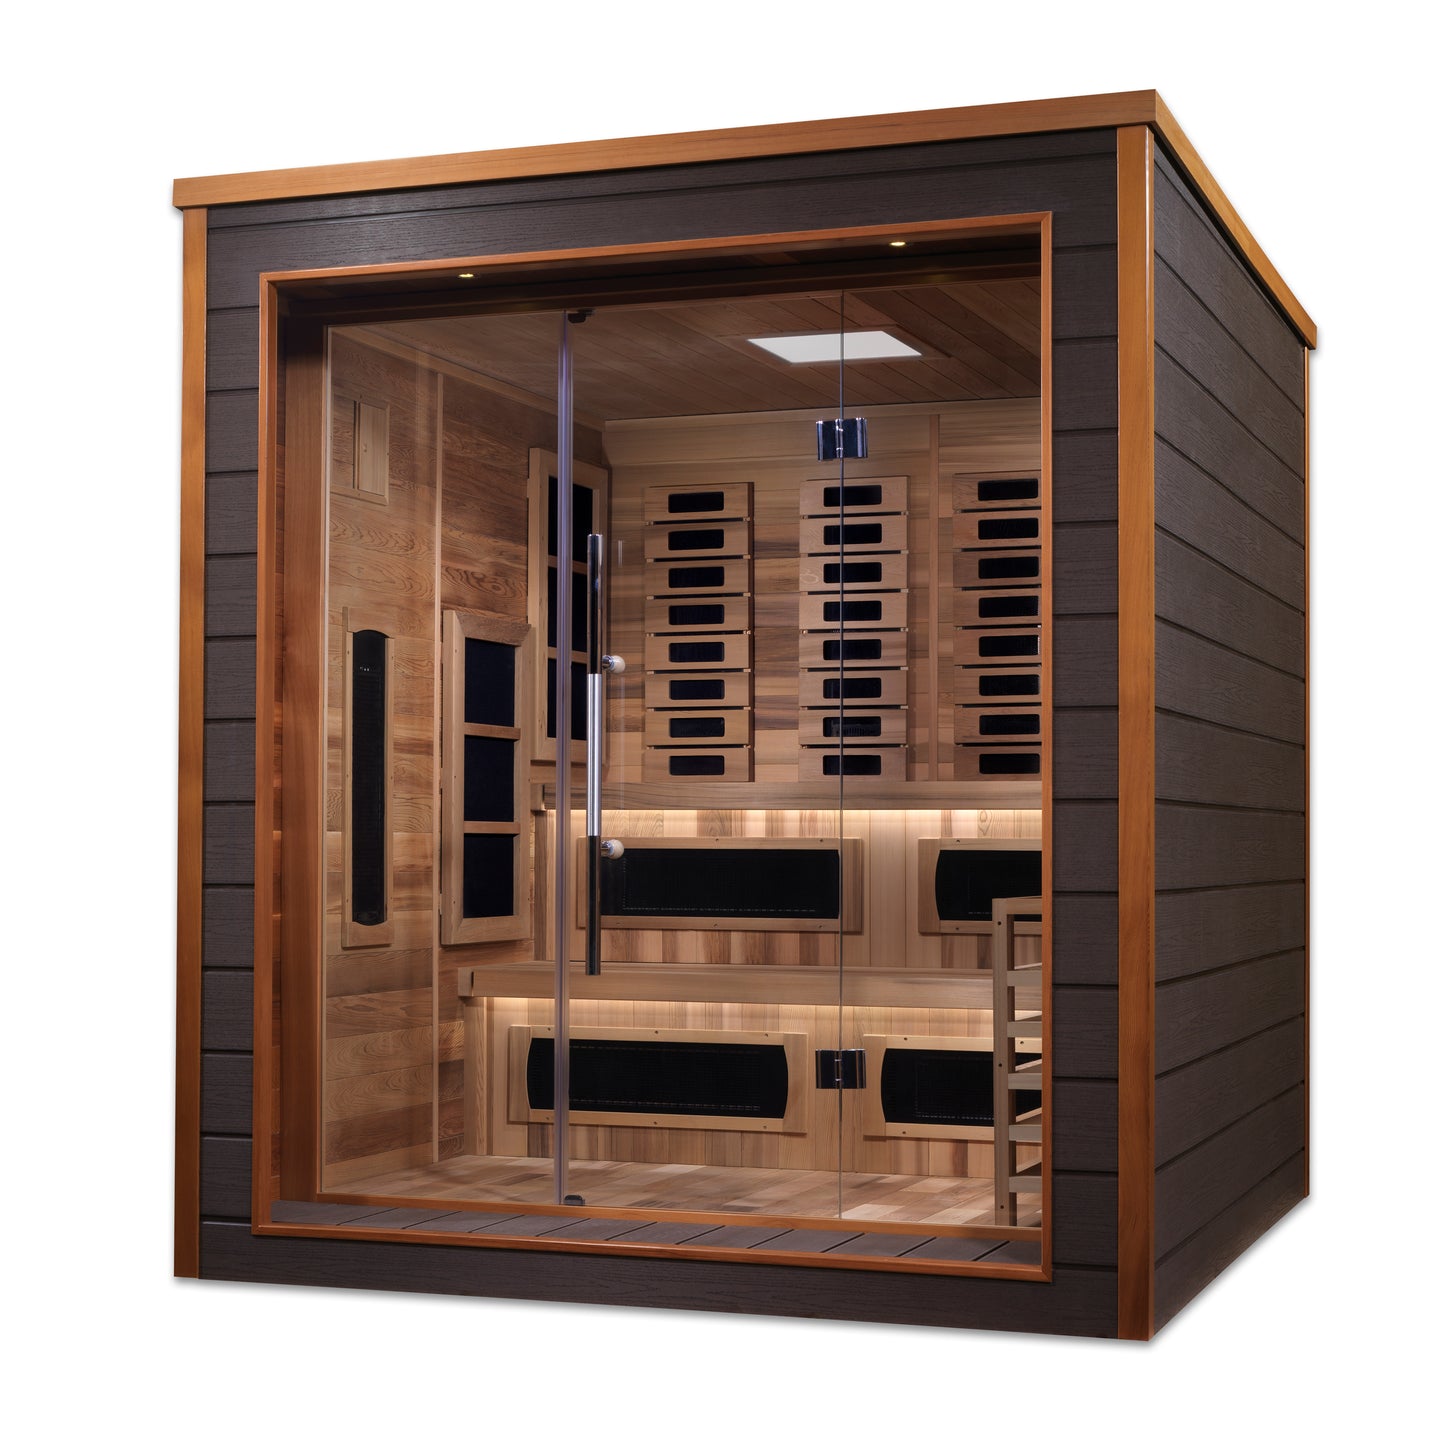 Golden Designs "Karlstad" 6 Person Outdoor-Indoor PureTech™ Hybrid Full Spectrum Sauna